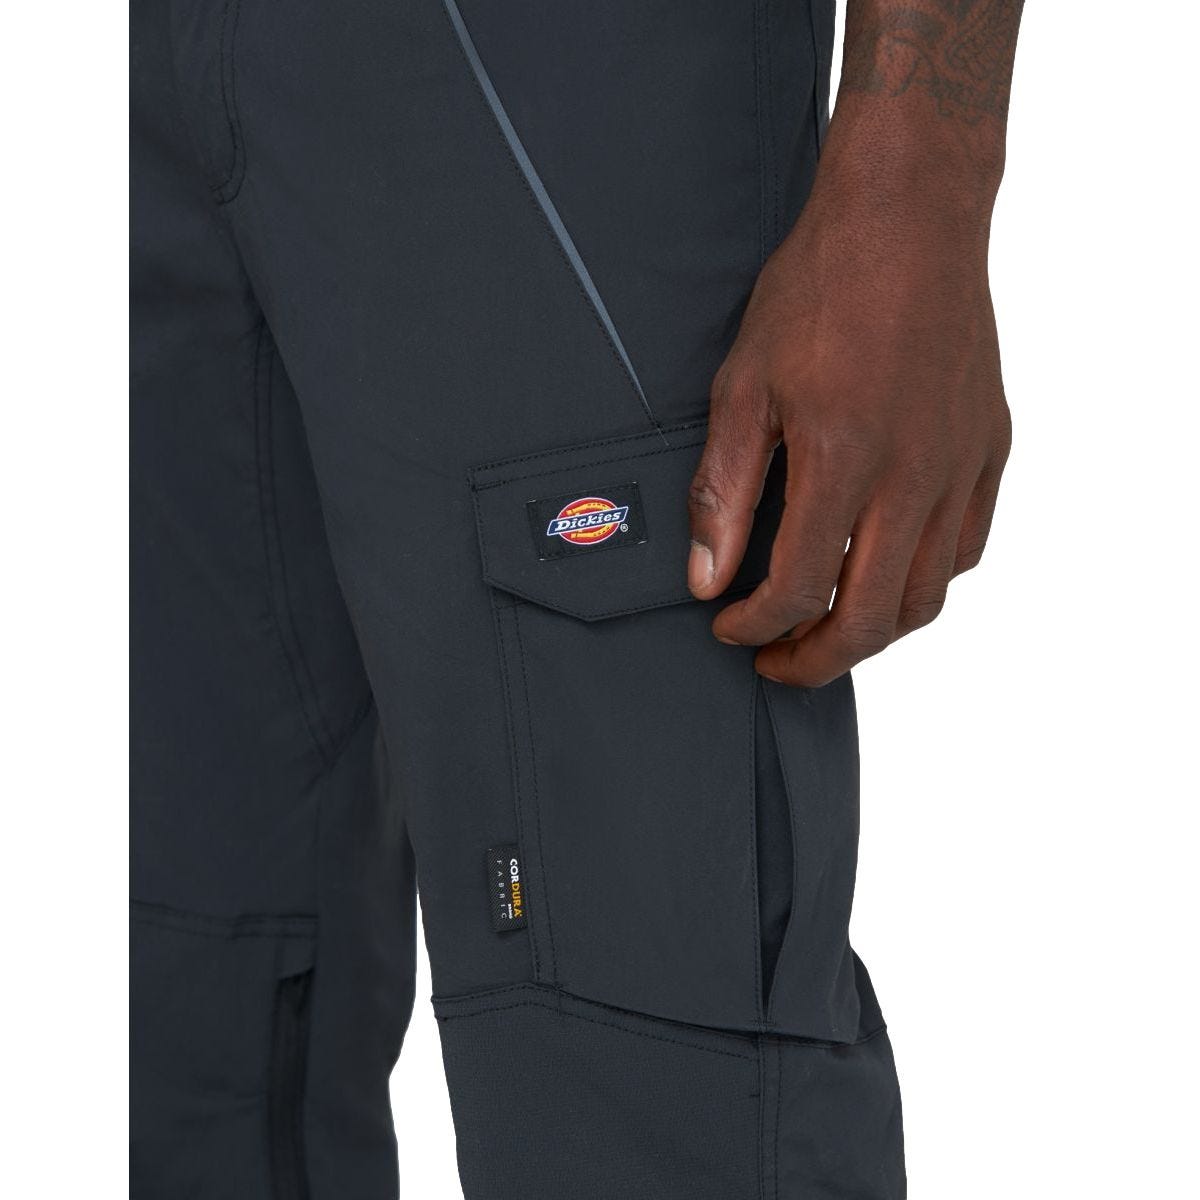 Pantalon léger Flex Noir - Dickies - Taille 54 4